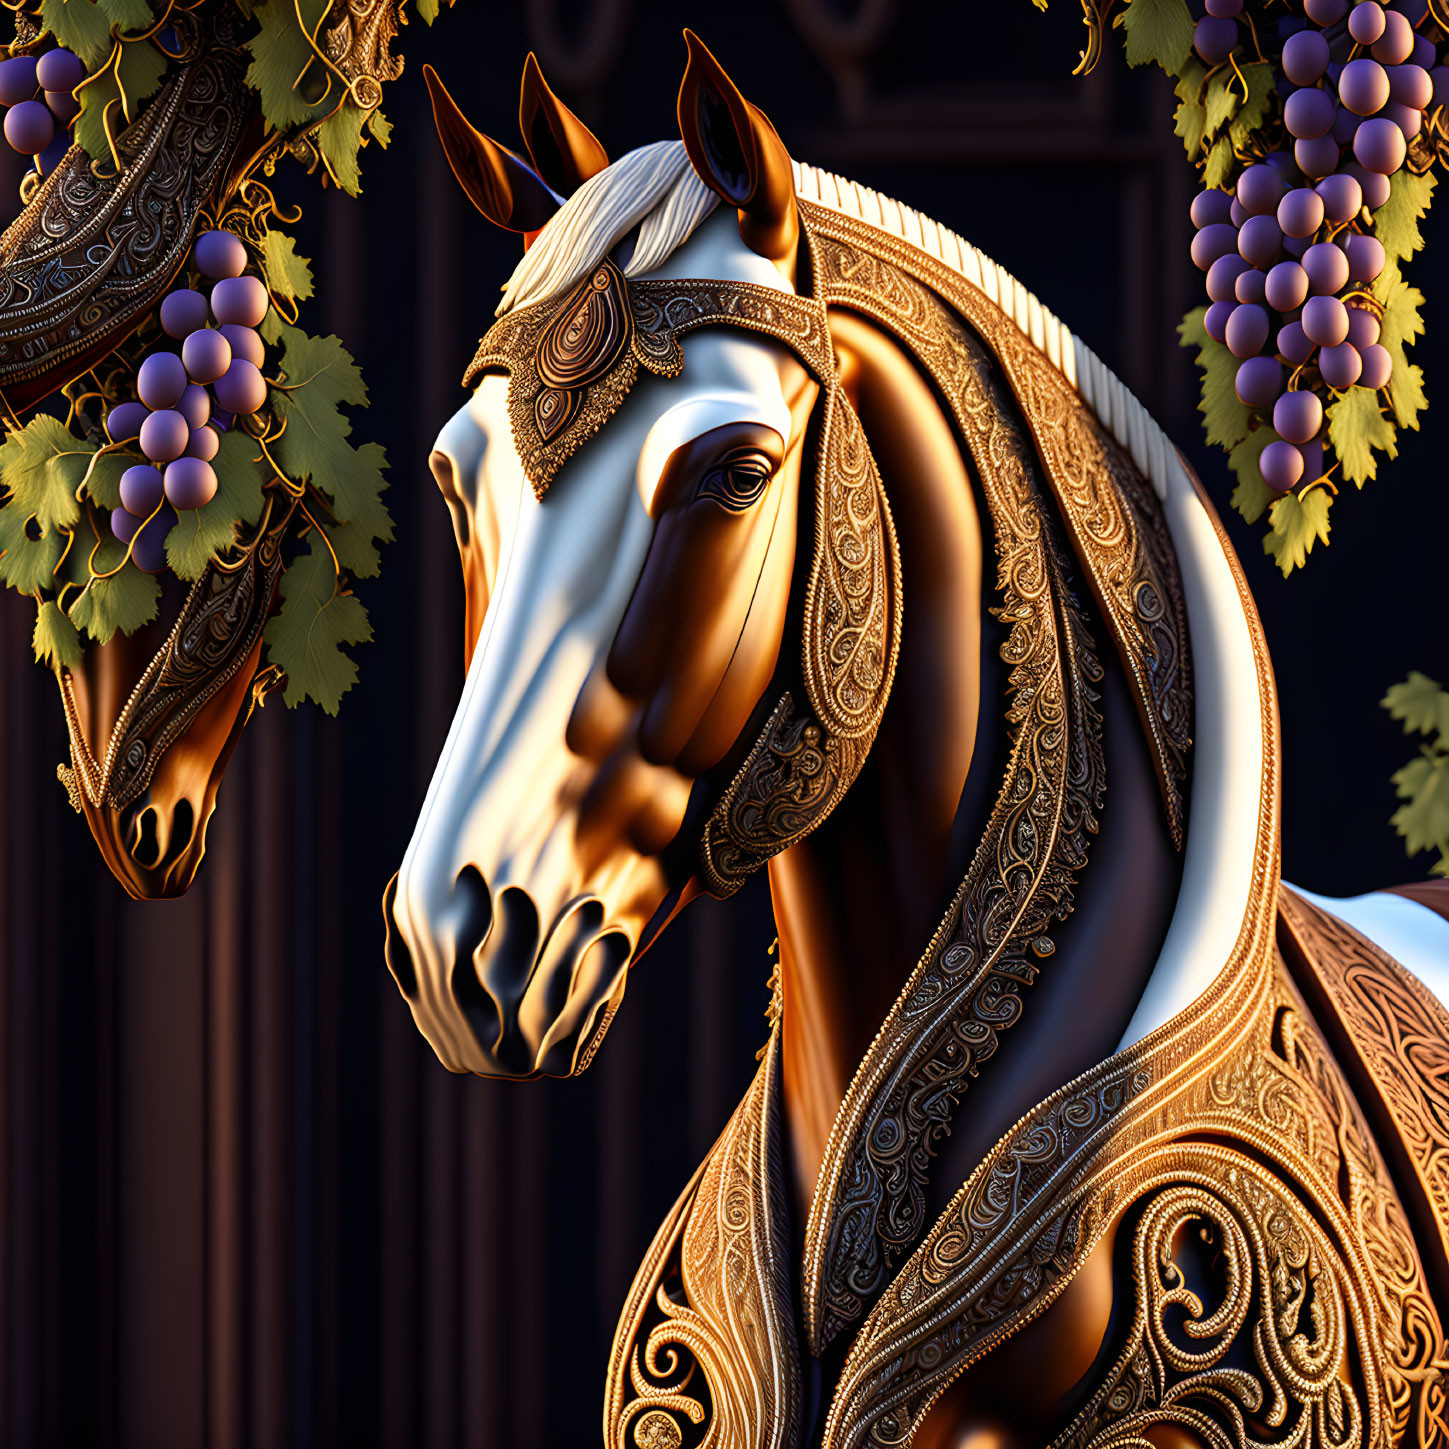 Golden Horse Sculpture with Intricate Details on Dark Background